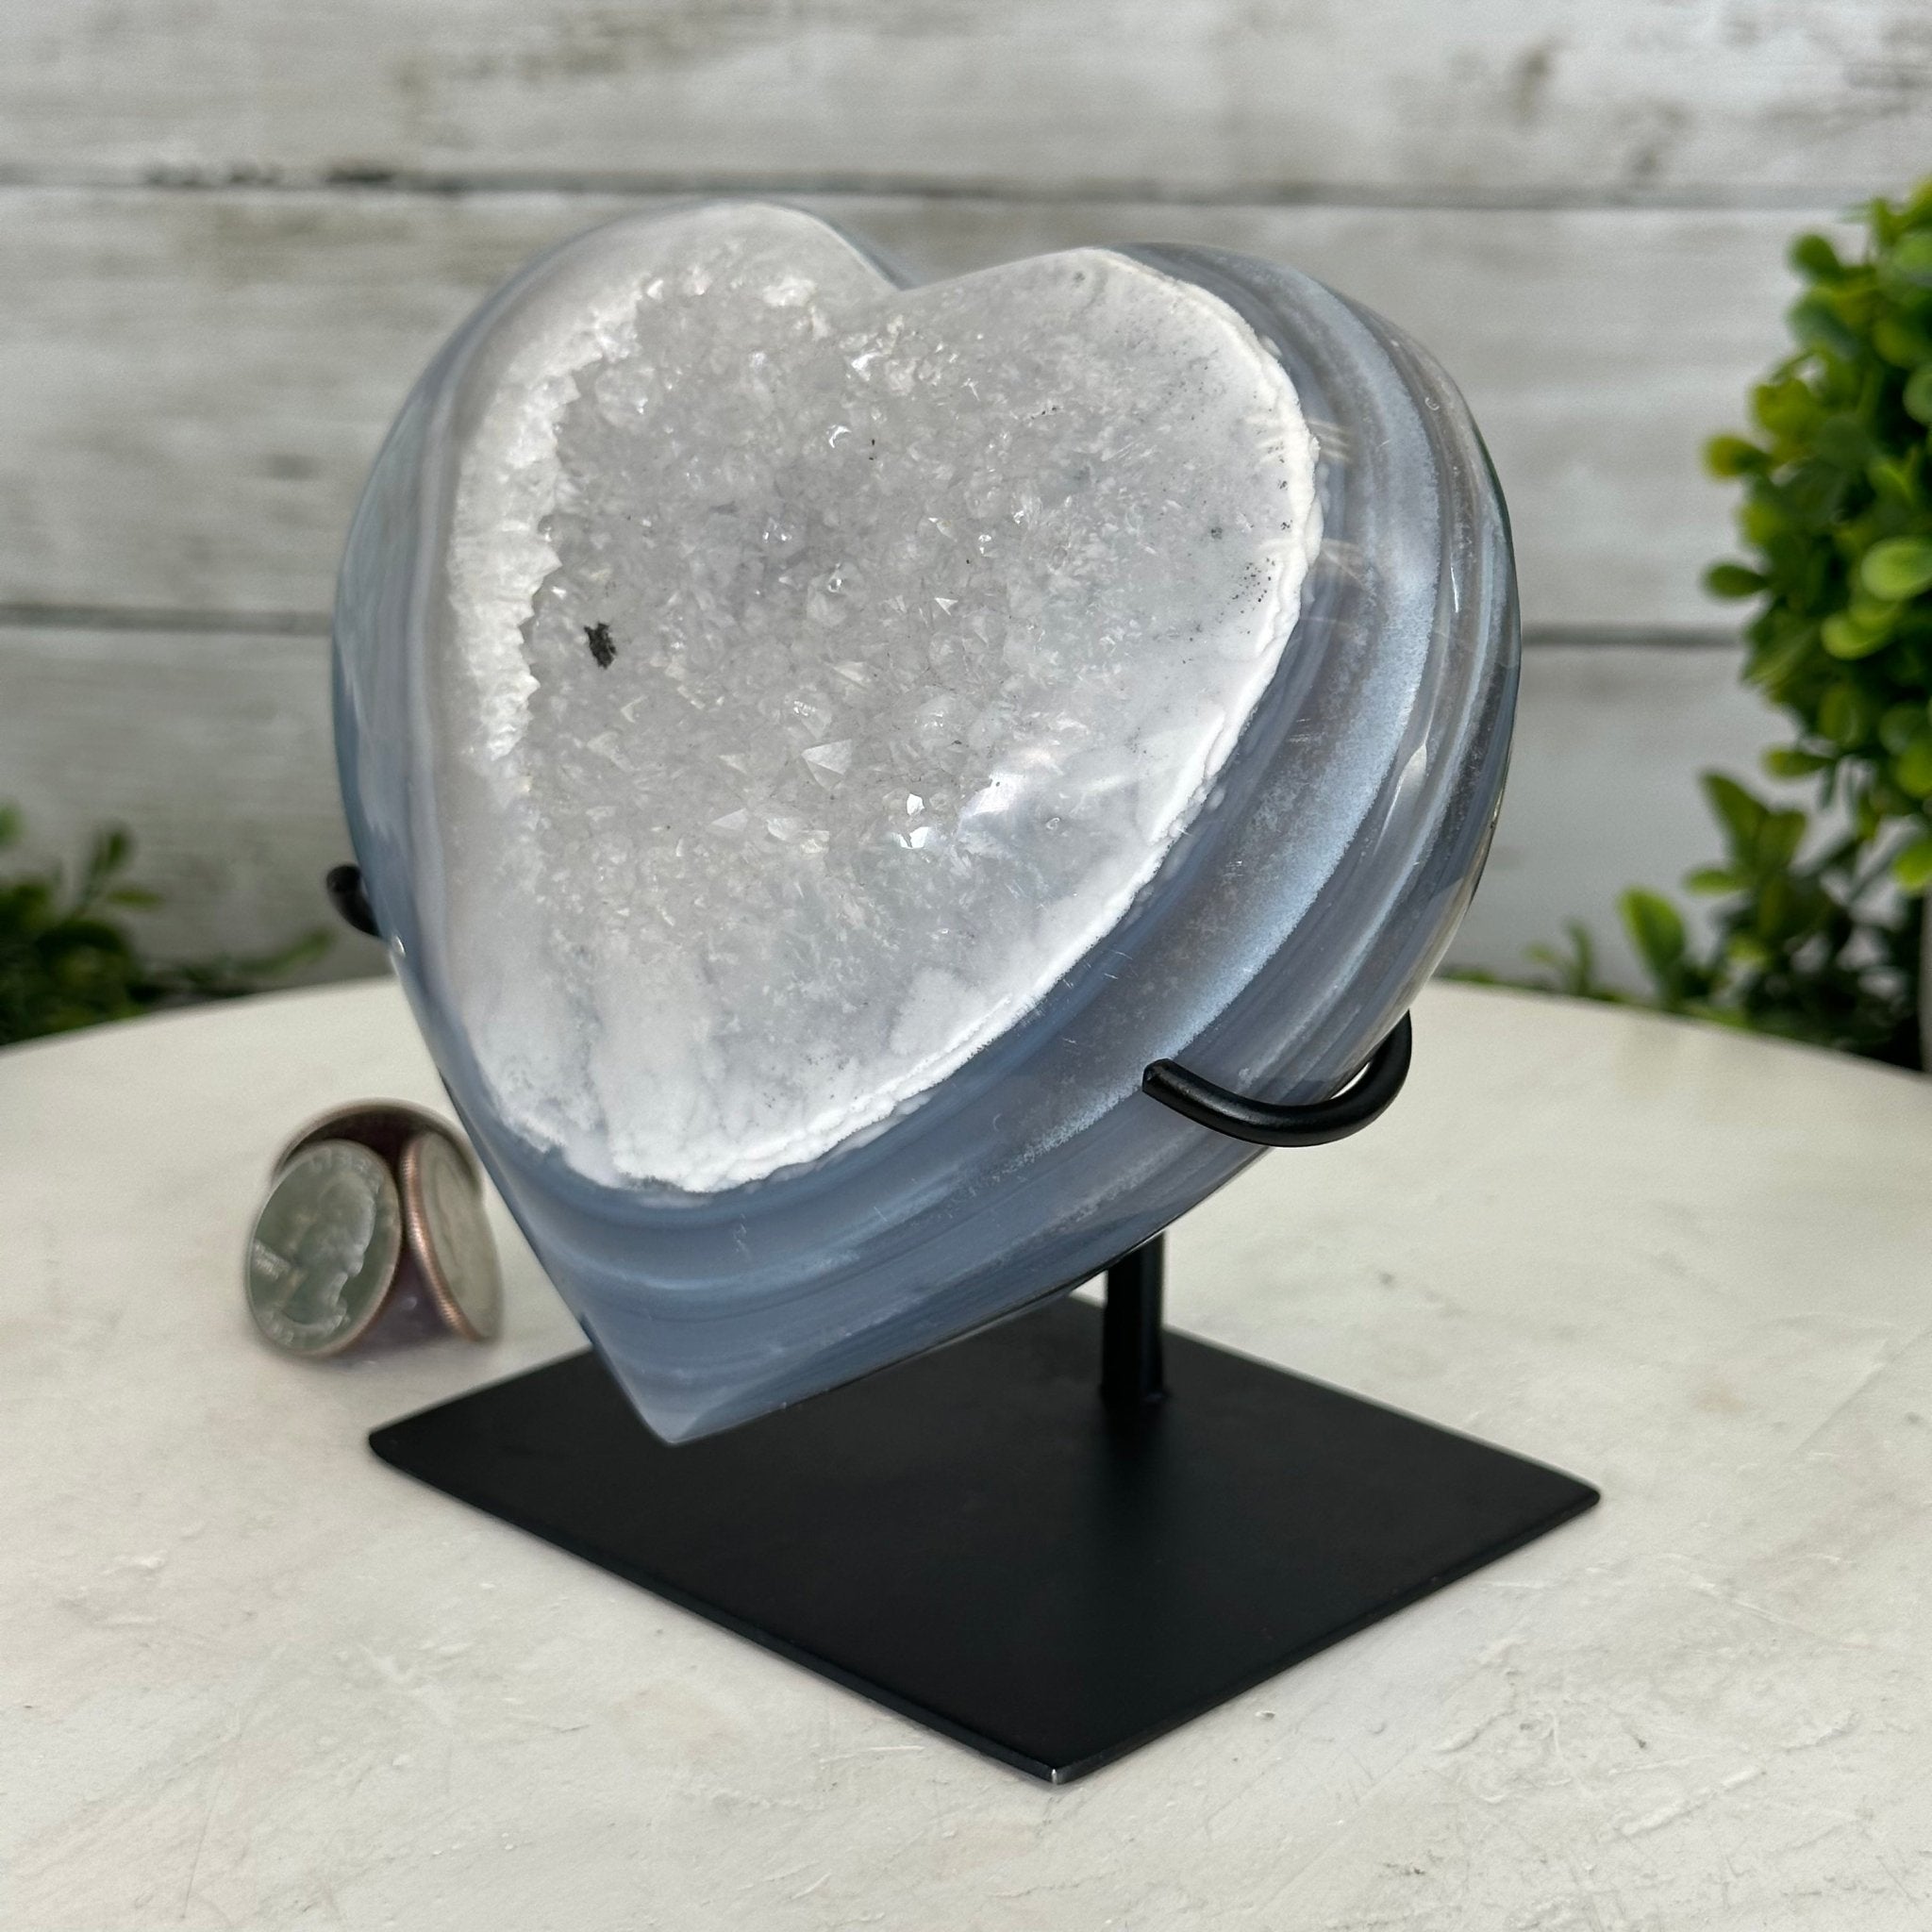 Polished Agate Heart Geode on a Metal Stand, 3 lbs & 5.3" Tall, Model #5468-0046 by Brazil Gems - Brazil GemsBrazil GemsPolished Agate Heart Geode on a Metal Stand, 3 lbs & 5.3" Tall, Model #5468-0046 by Brazil GemsHearts5468-0046